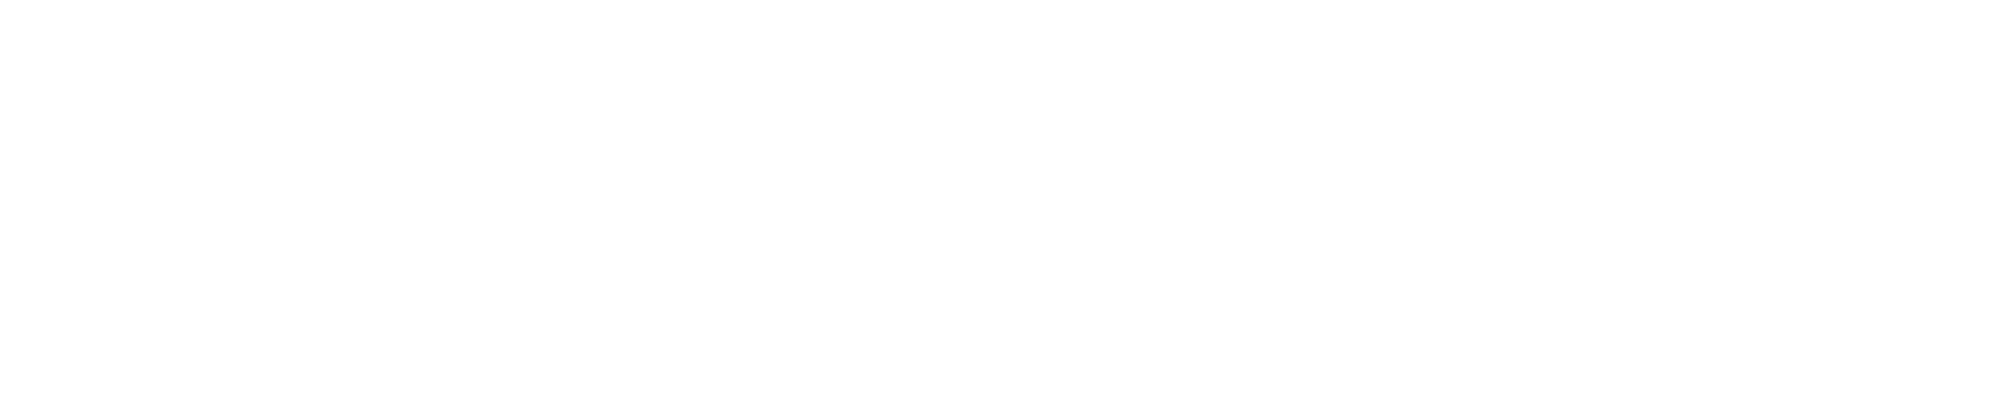 netlock-logo